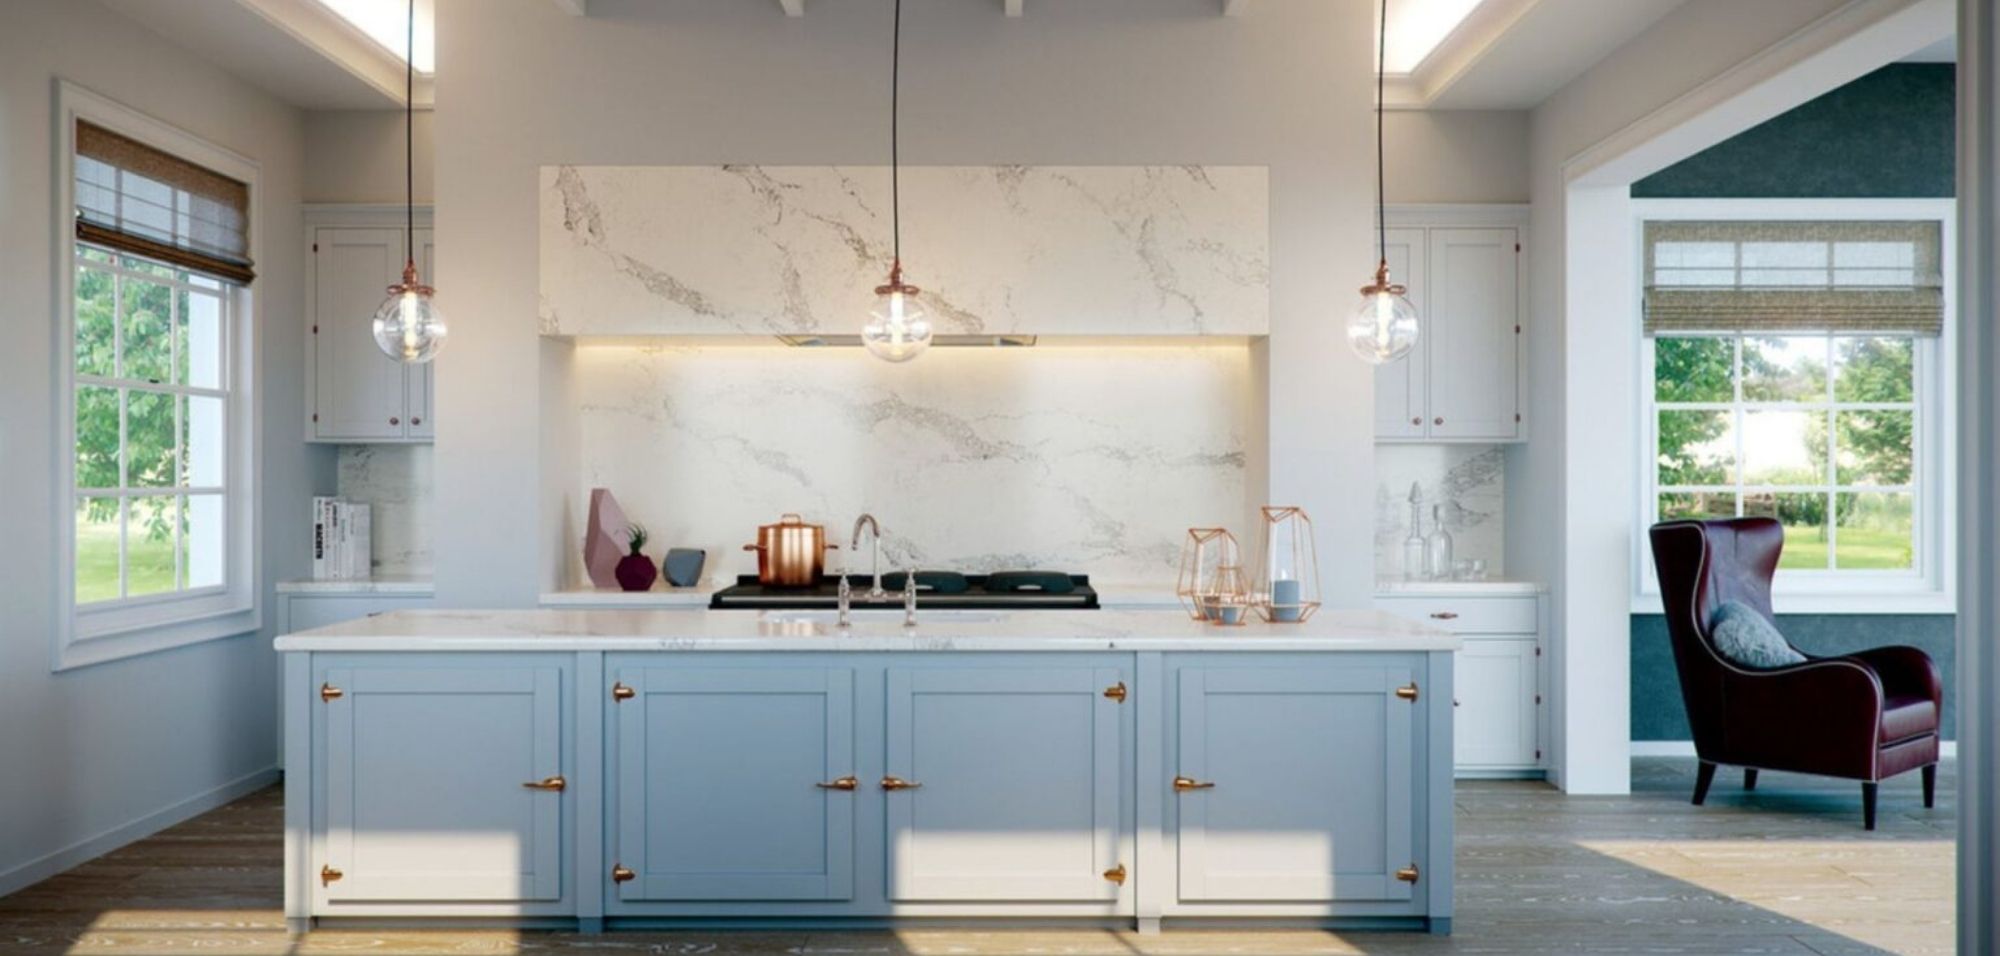 Statuario maximus caesarstone quartz kitchen countertops kitchen island light blue cabinetry